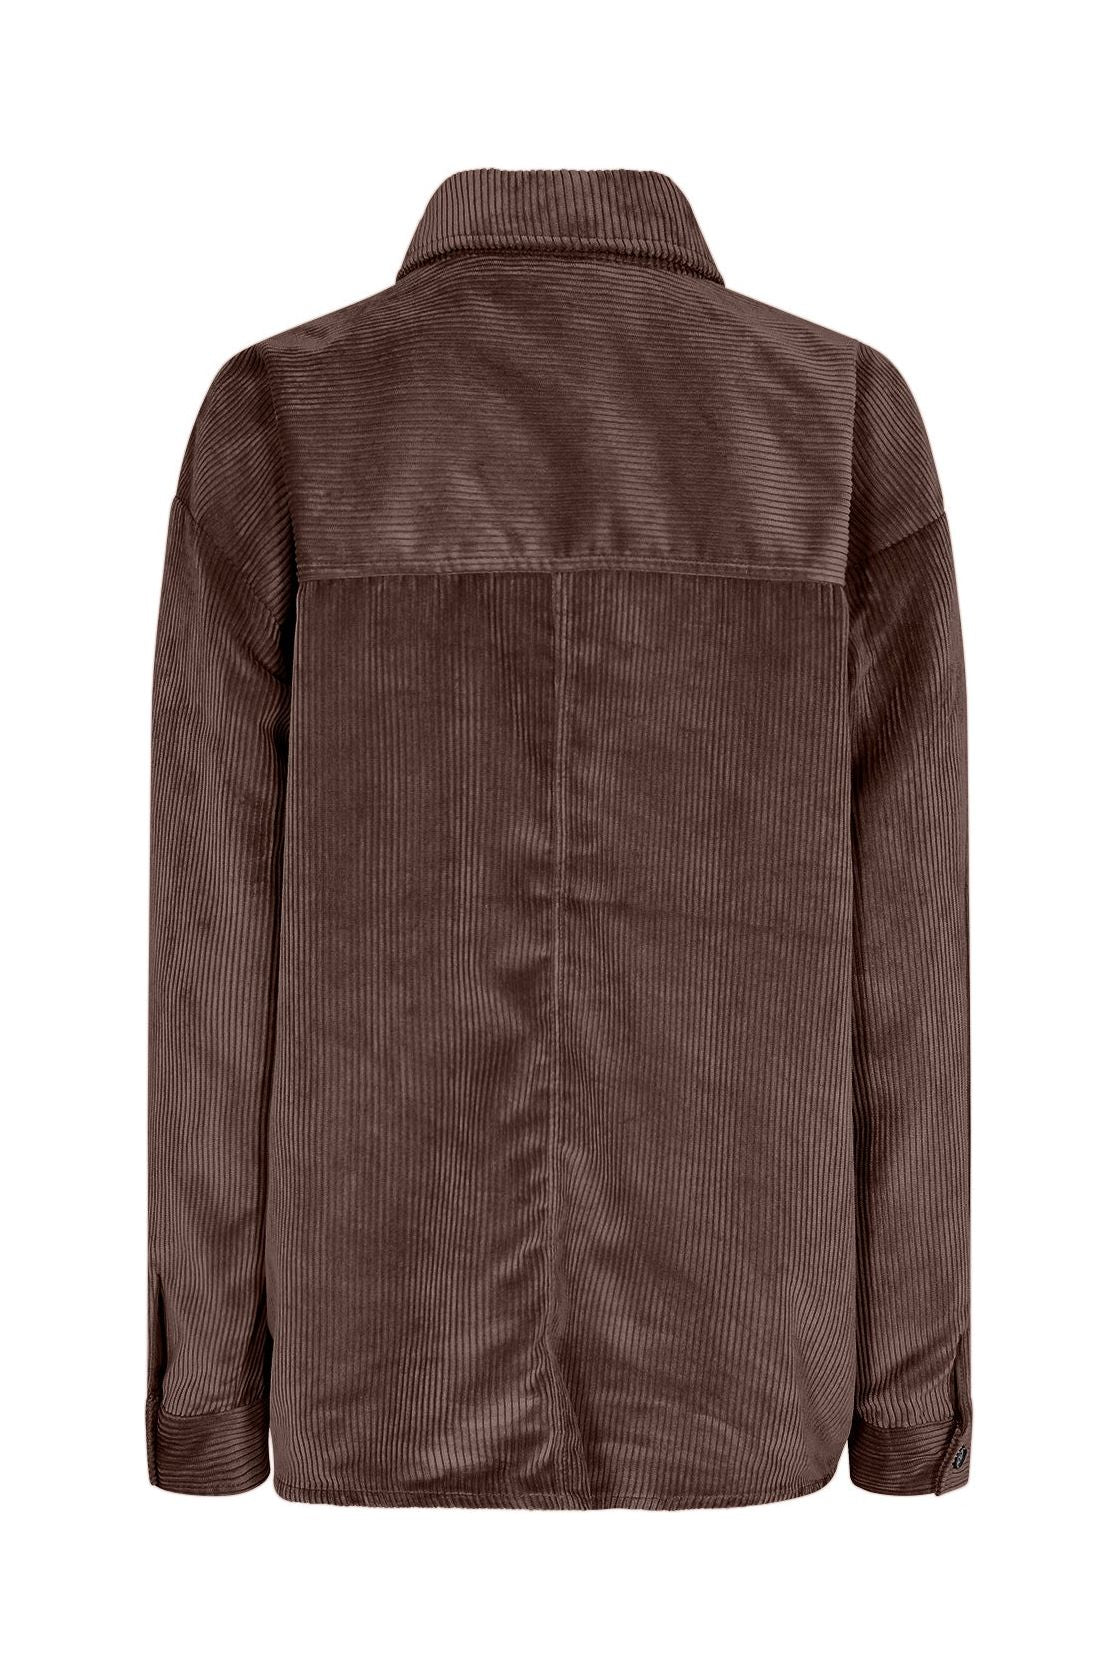 SoyaConcept - Bindi 11 - 18204 - Corduroy Shirt/Jacket - Coffee Bean